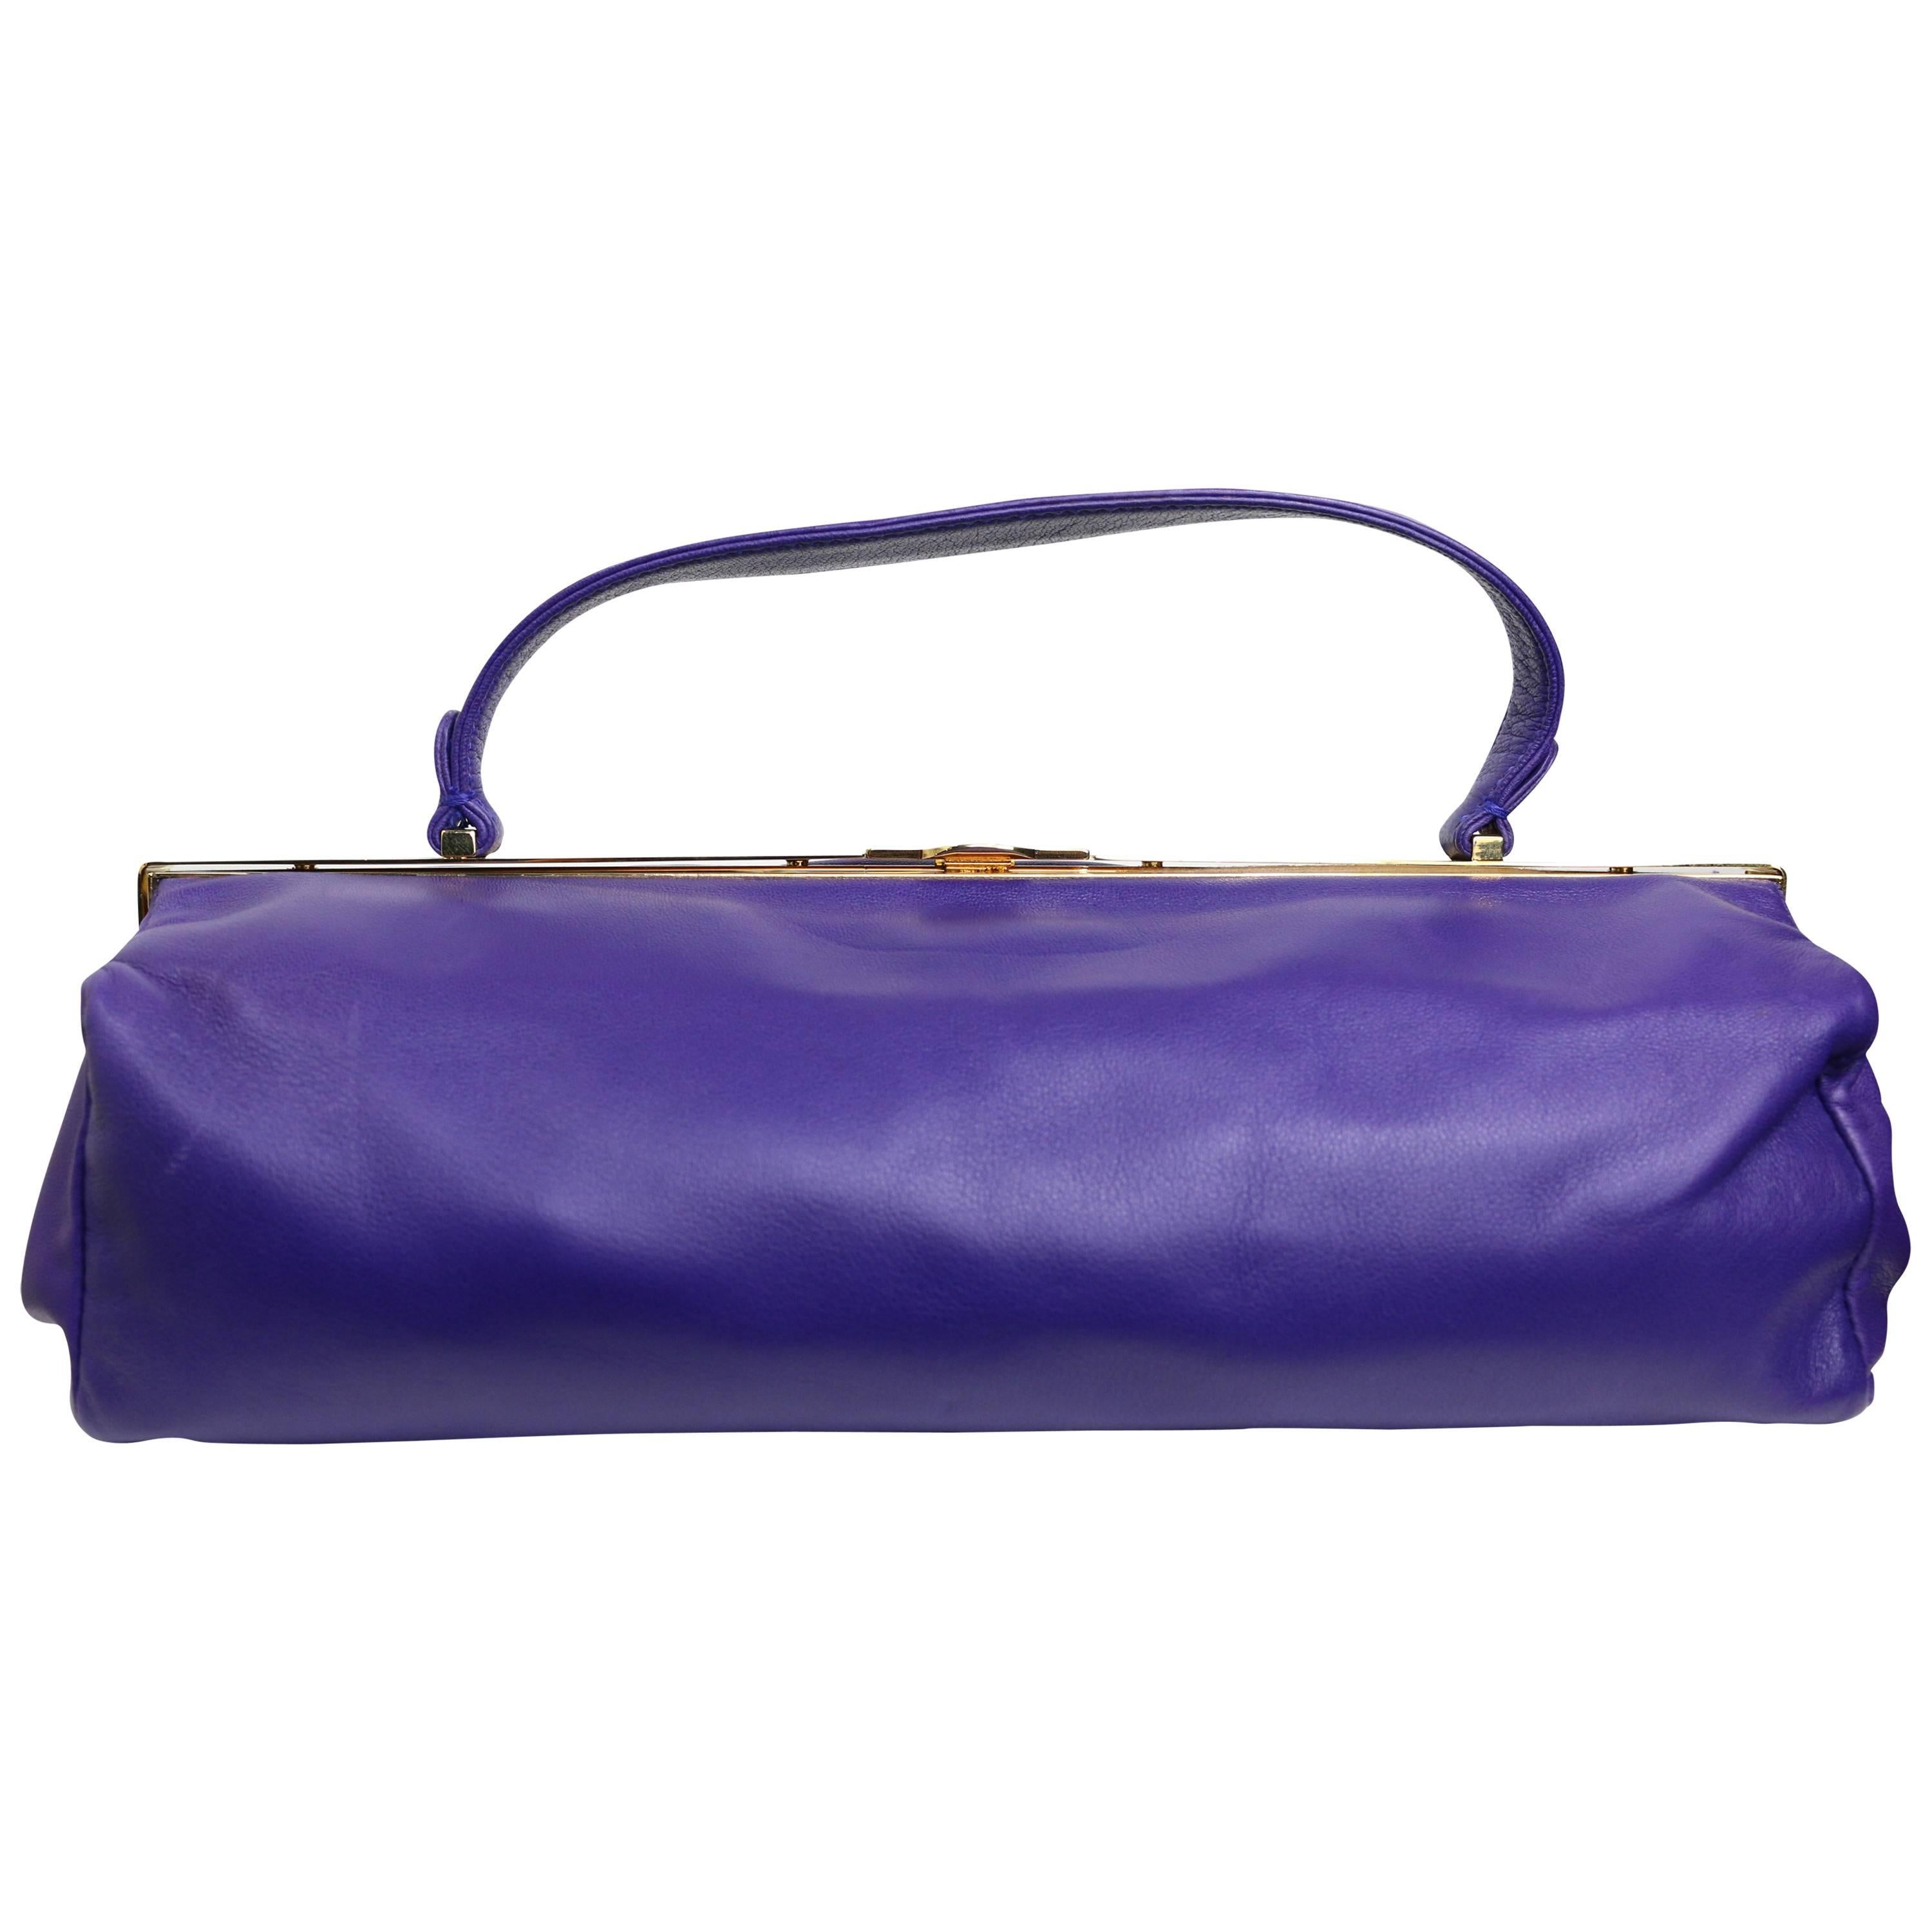 Miu Miu Purple Leather Handbag